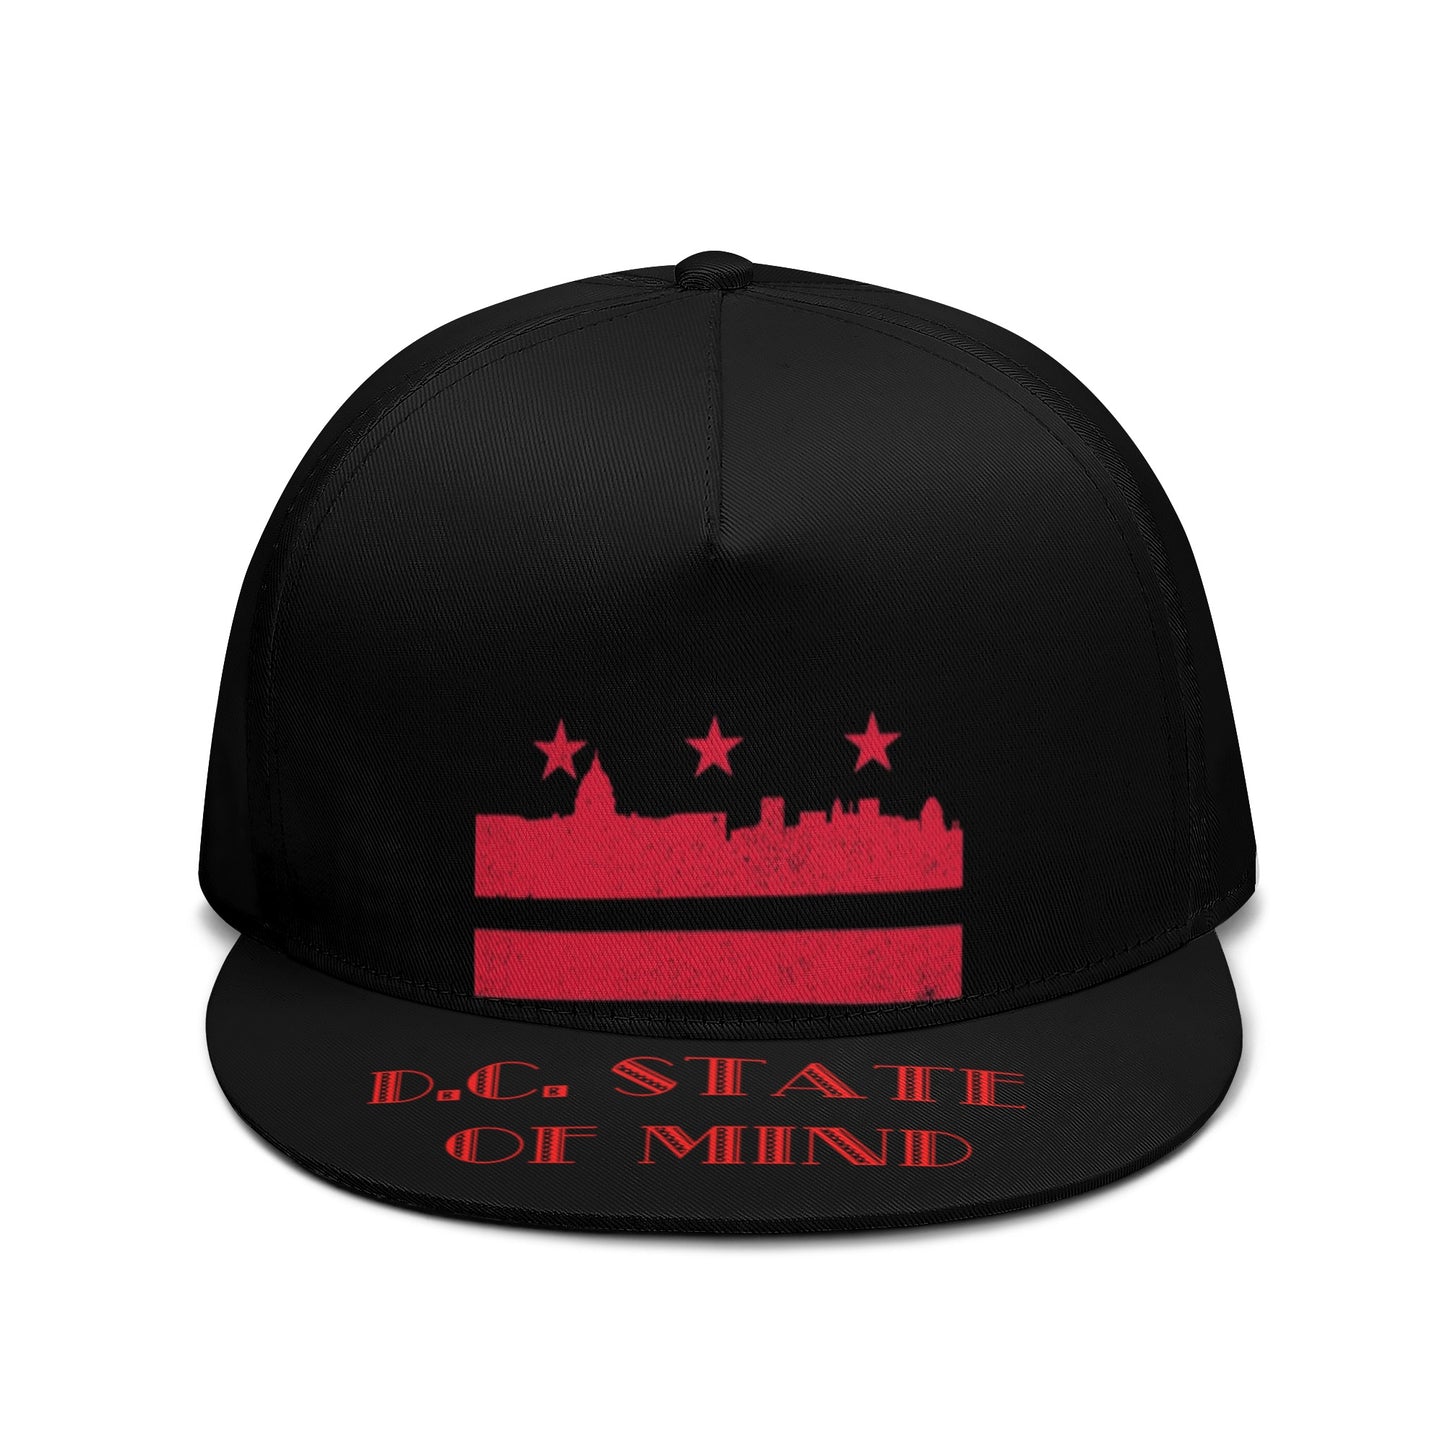 T4x Its A D.C. State of Mind Hip-Hop Hat